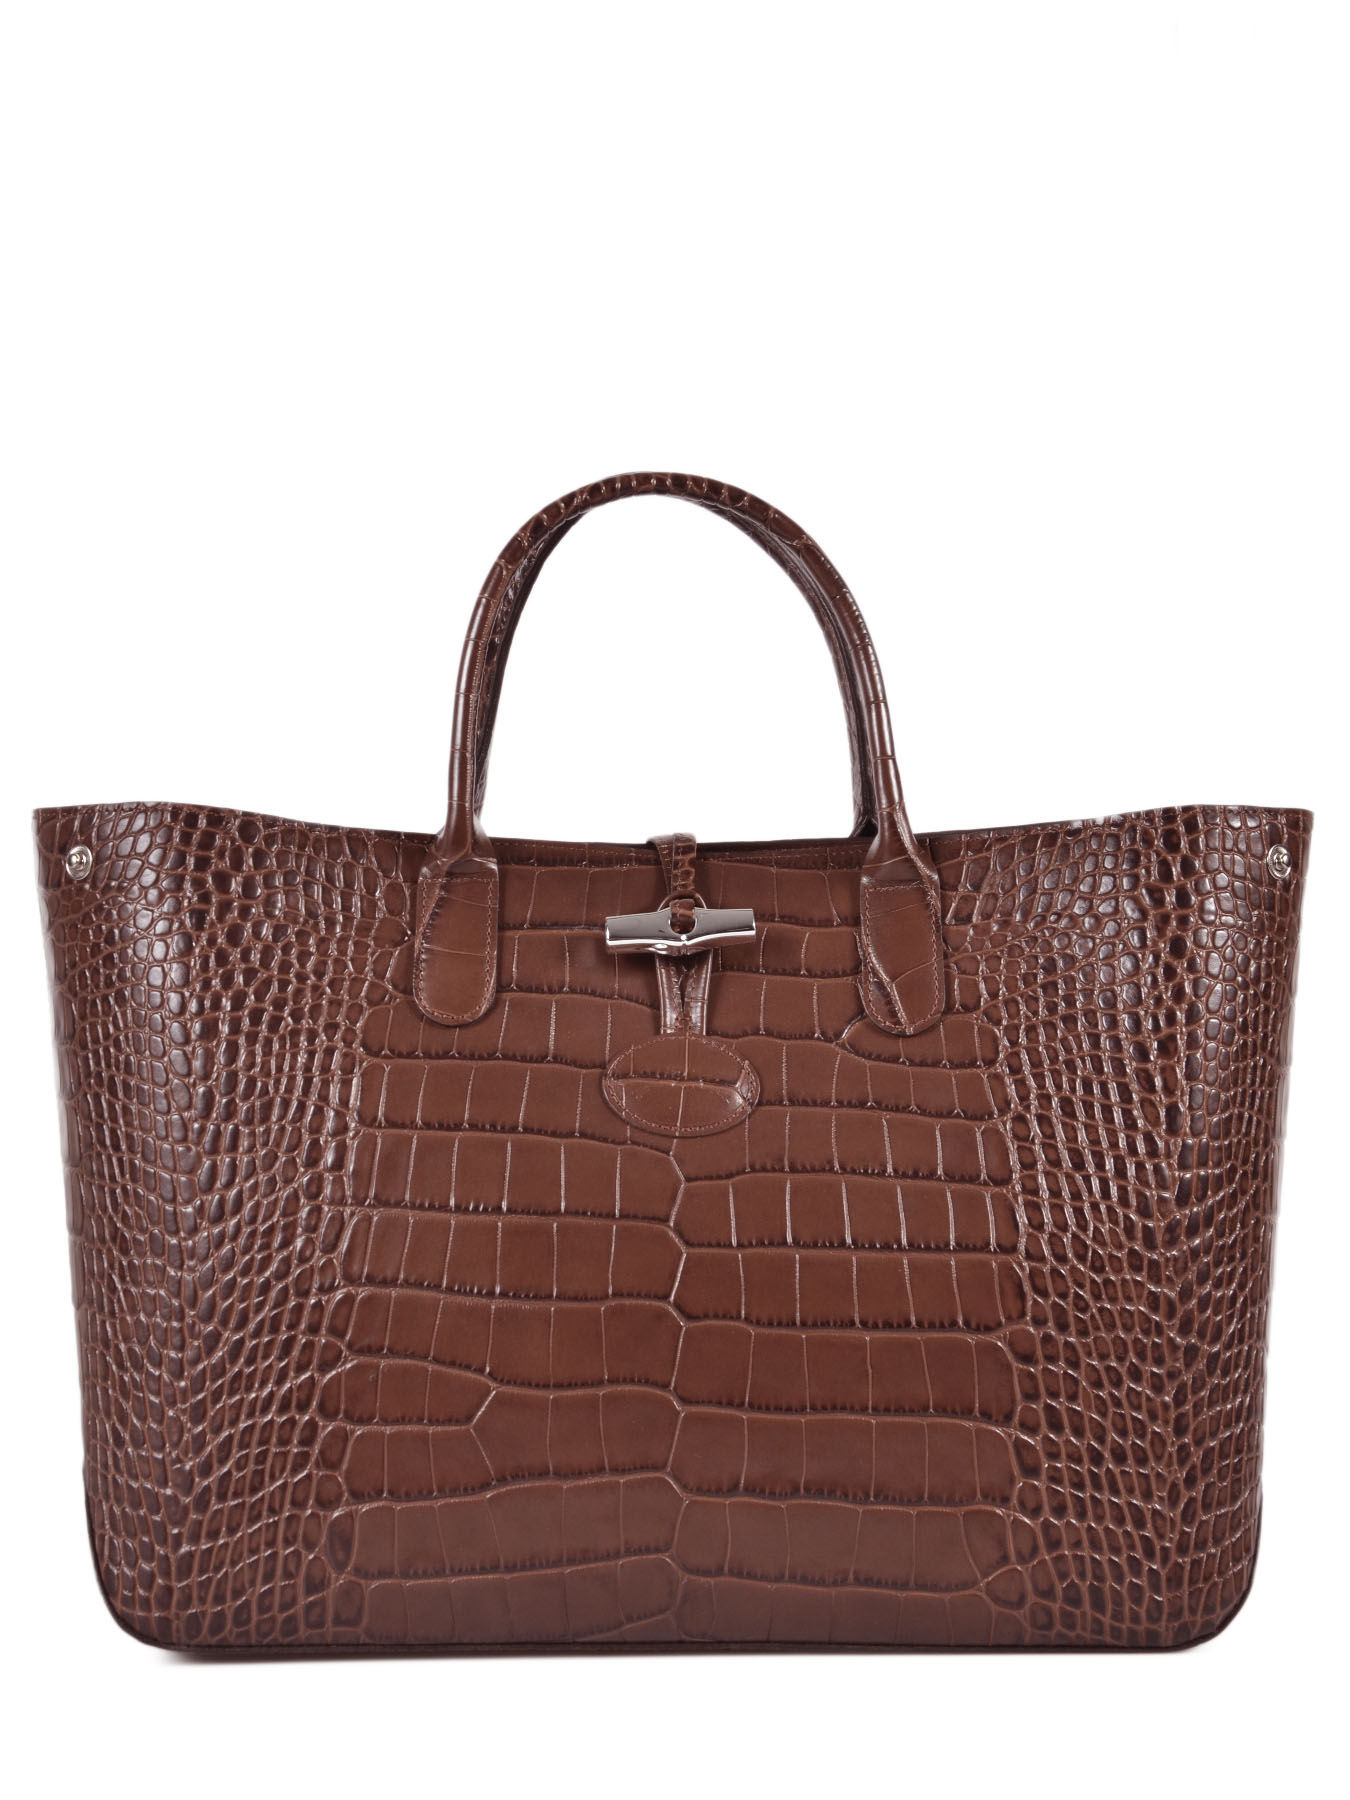 Longchamp Handbag Roseau croco - Best prices